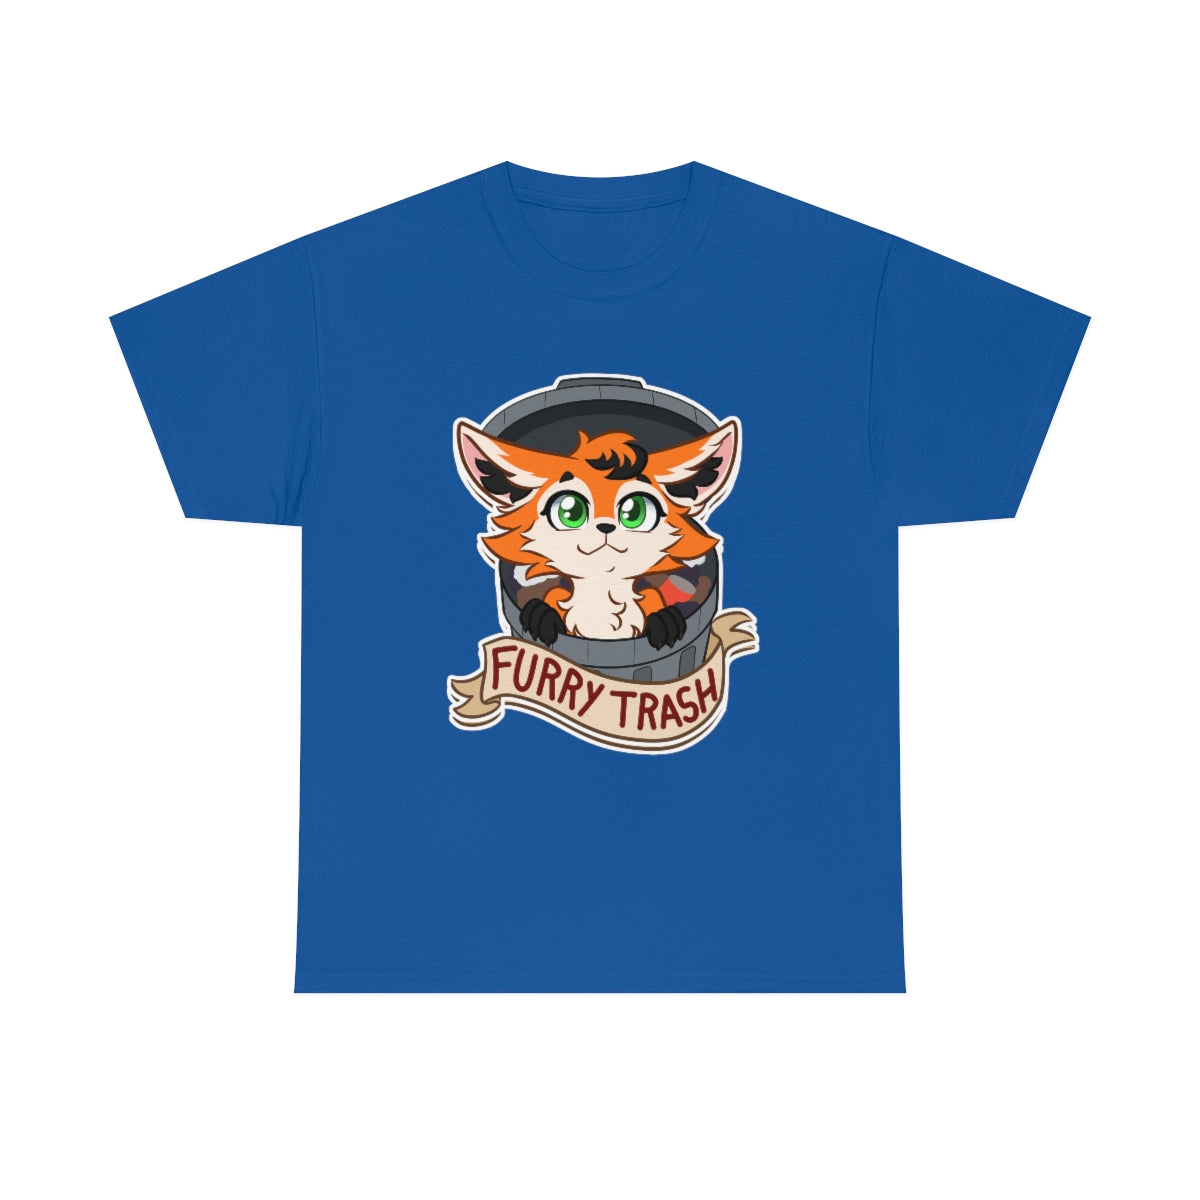 Furry Trash - T-Shirt T-Shirt Artworktee Royal Blue S 